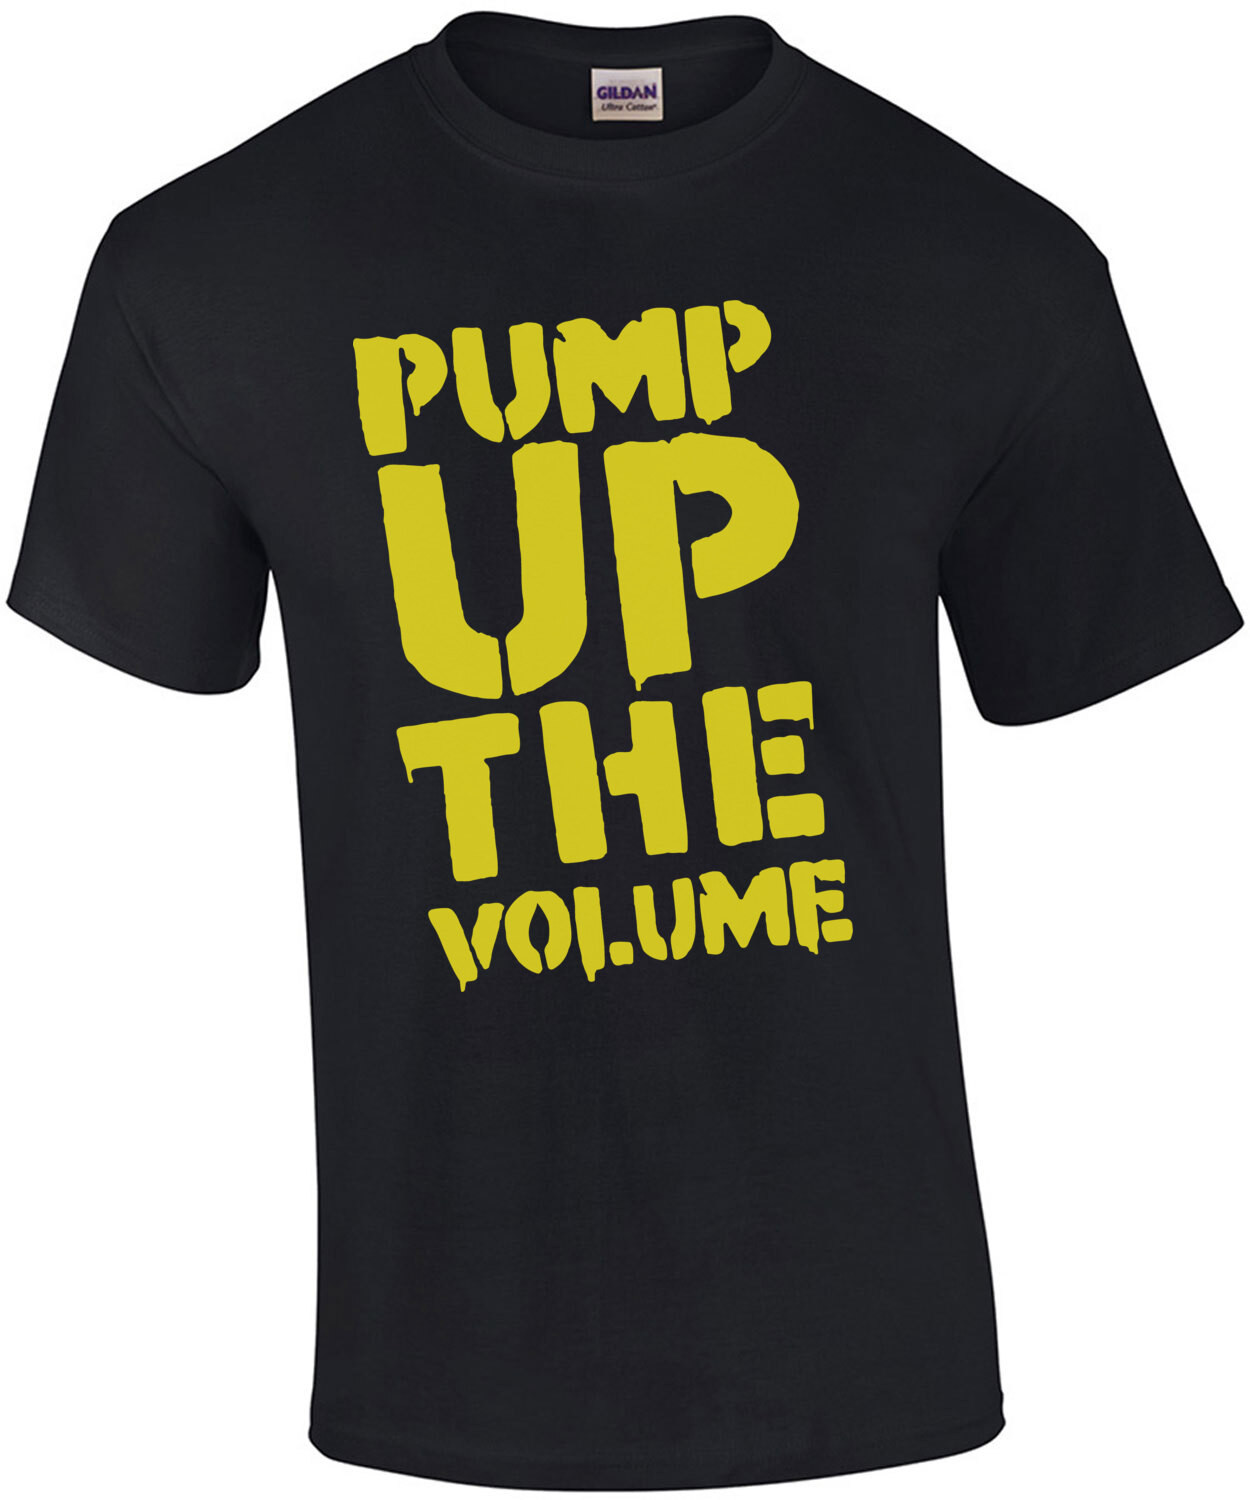 Pump Up The Volume - 90's T-Shirt